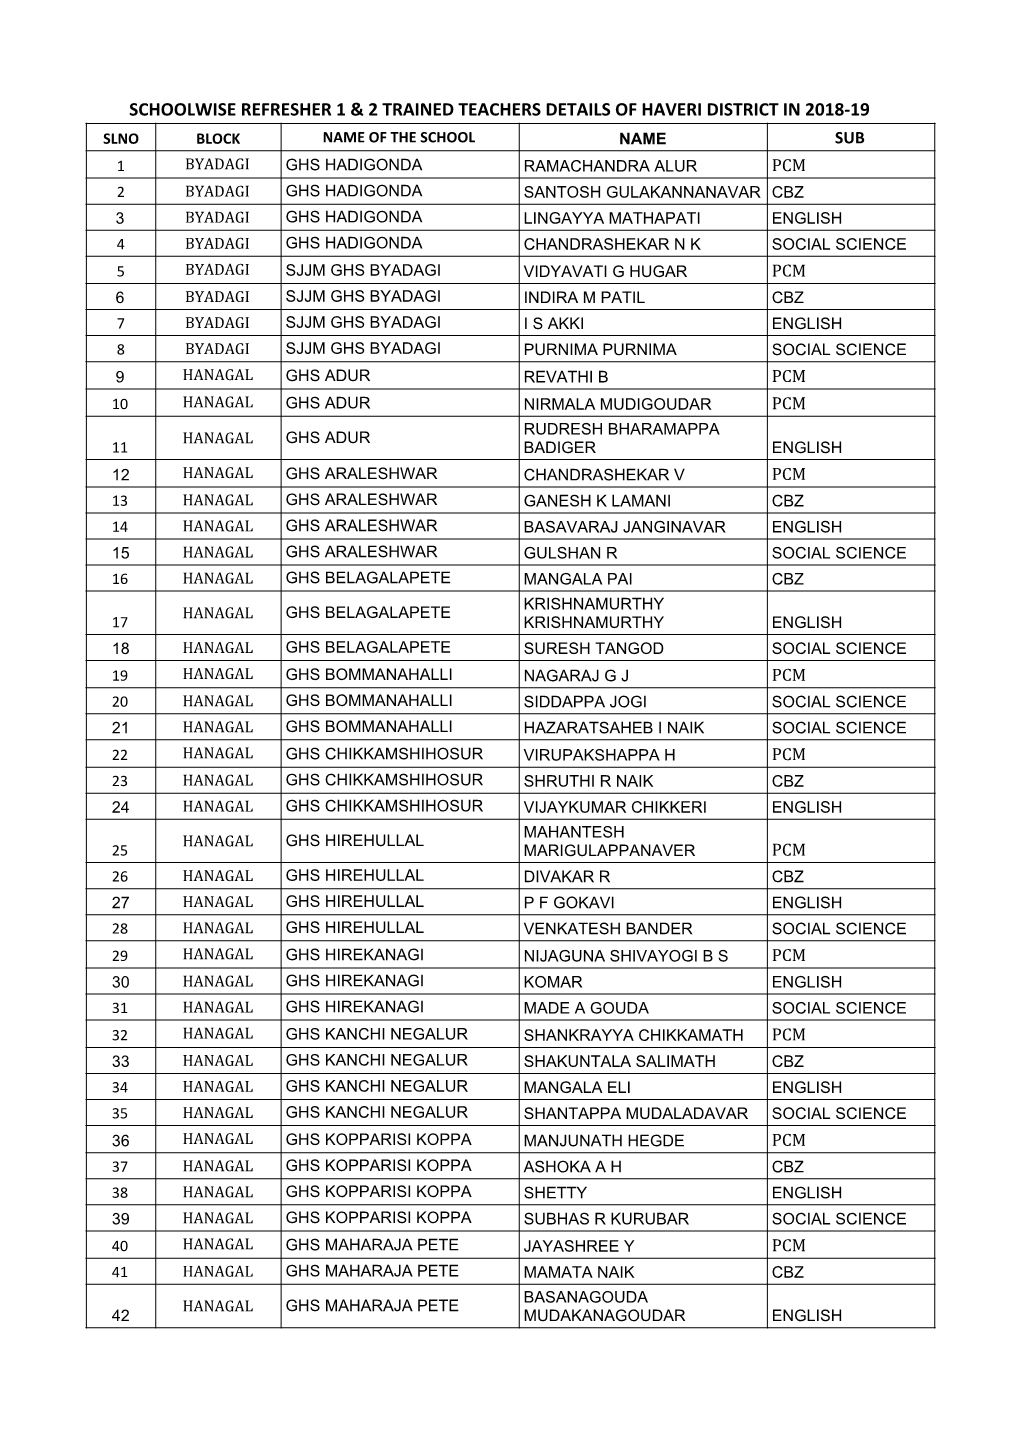 List of Trained Teachers Induction-1 Haveri